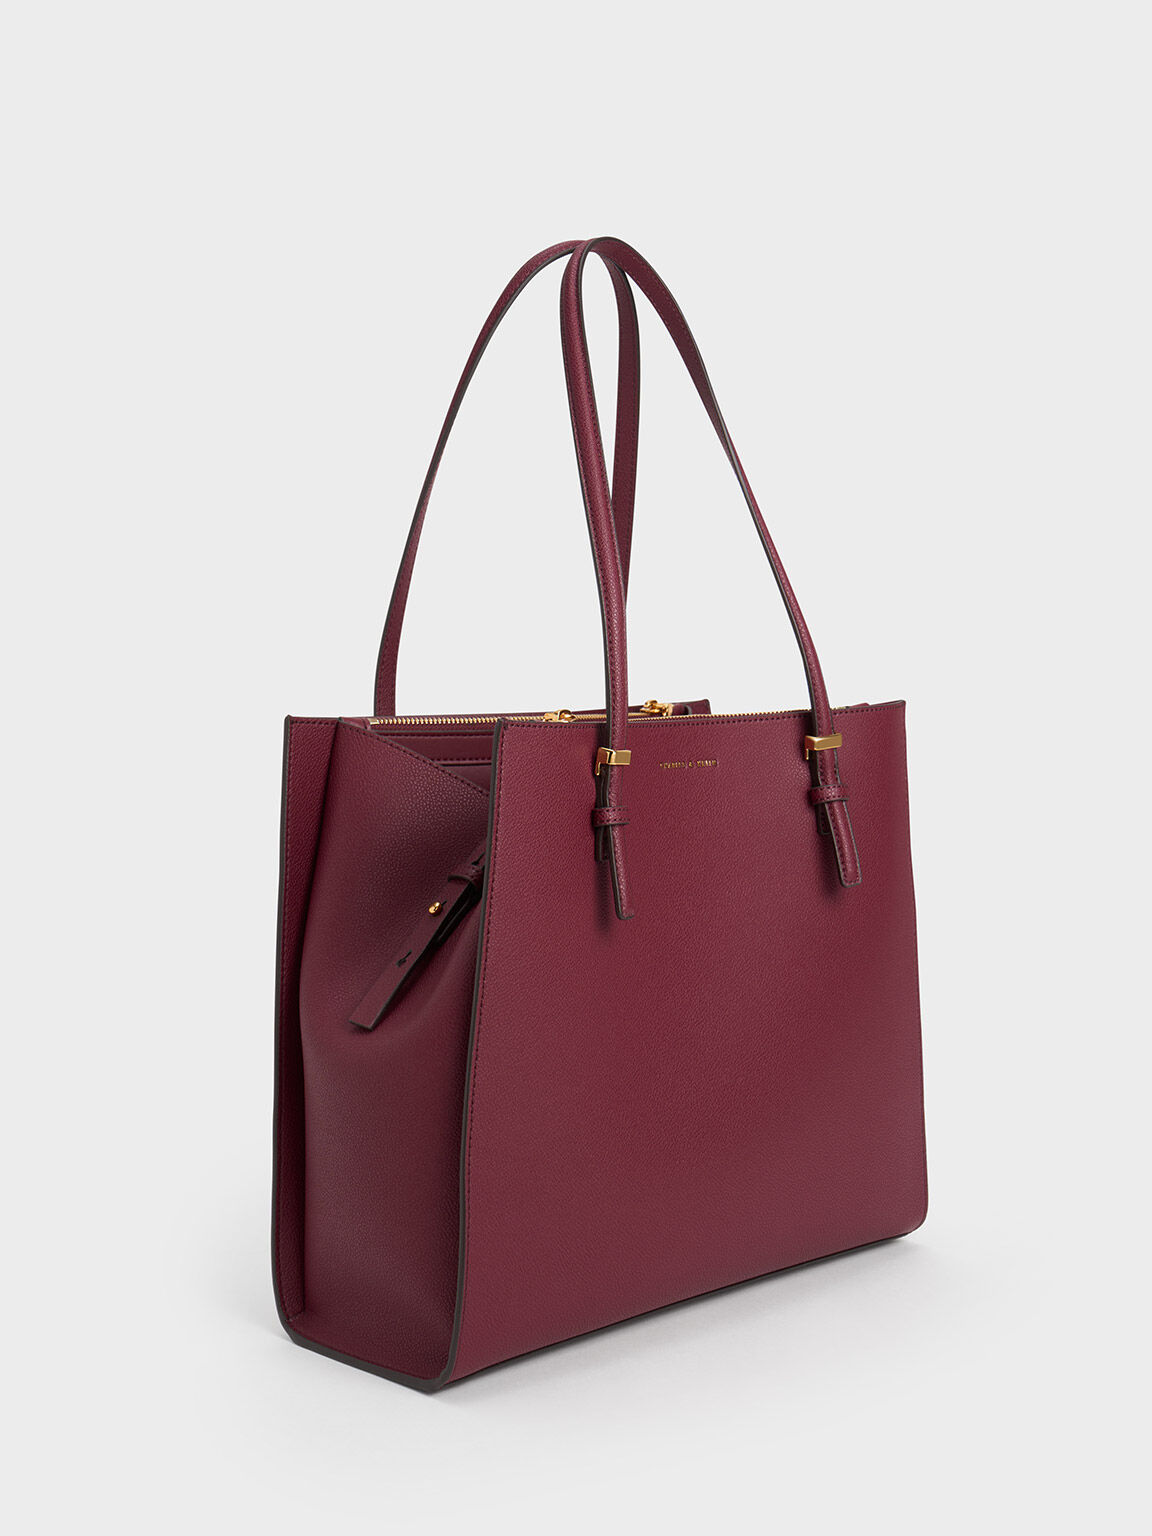 Buy Women Handbag Set 4 in 1 Soft PU Leather Top Handle Bag, Tote Bag,  Shoulder Bags Crossbody Bag Wallet Purse Set (Pink) at Amazon.in